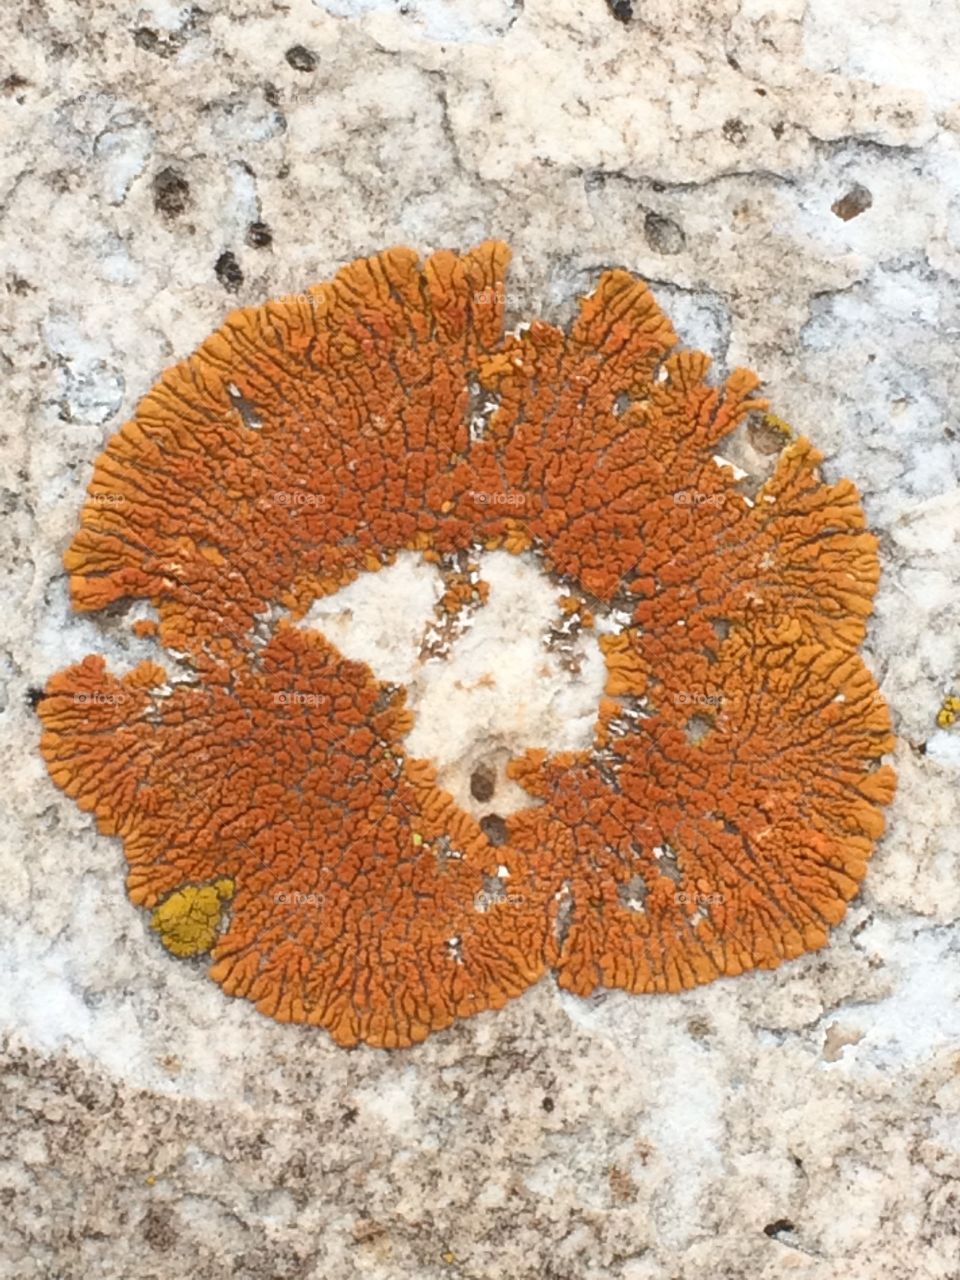 Orange rock flower